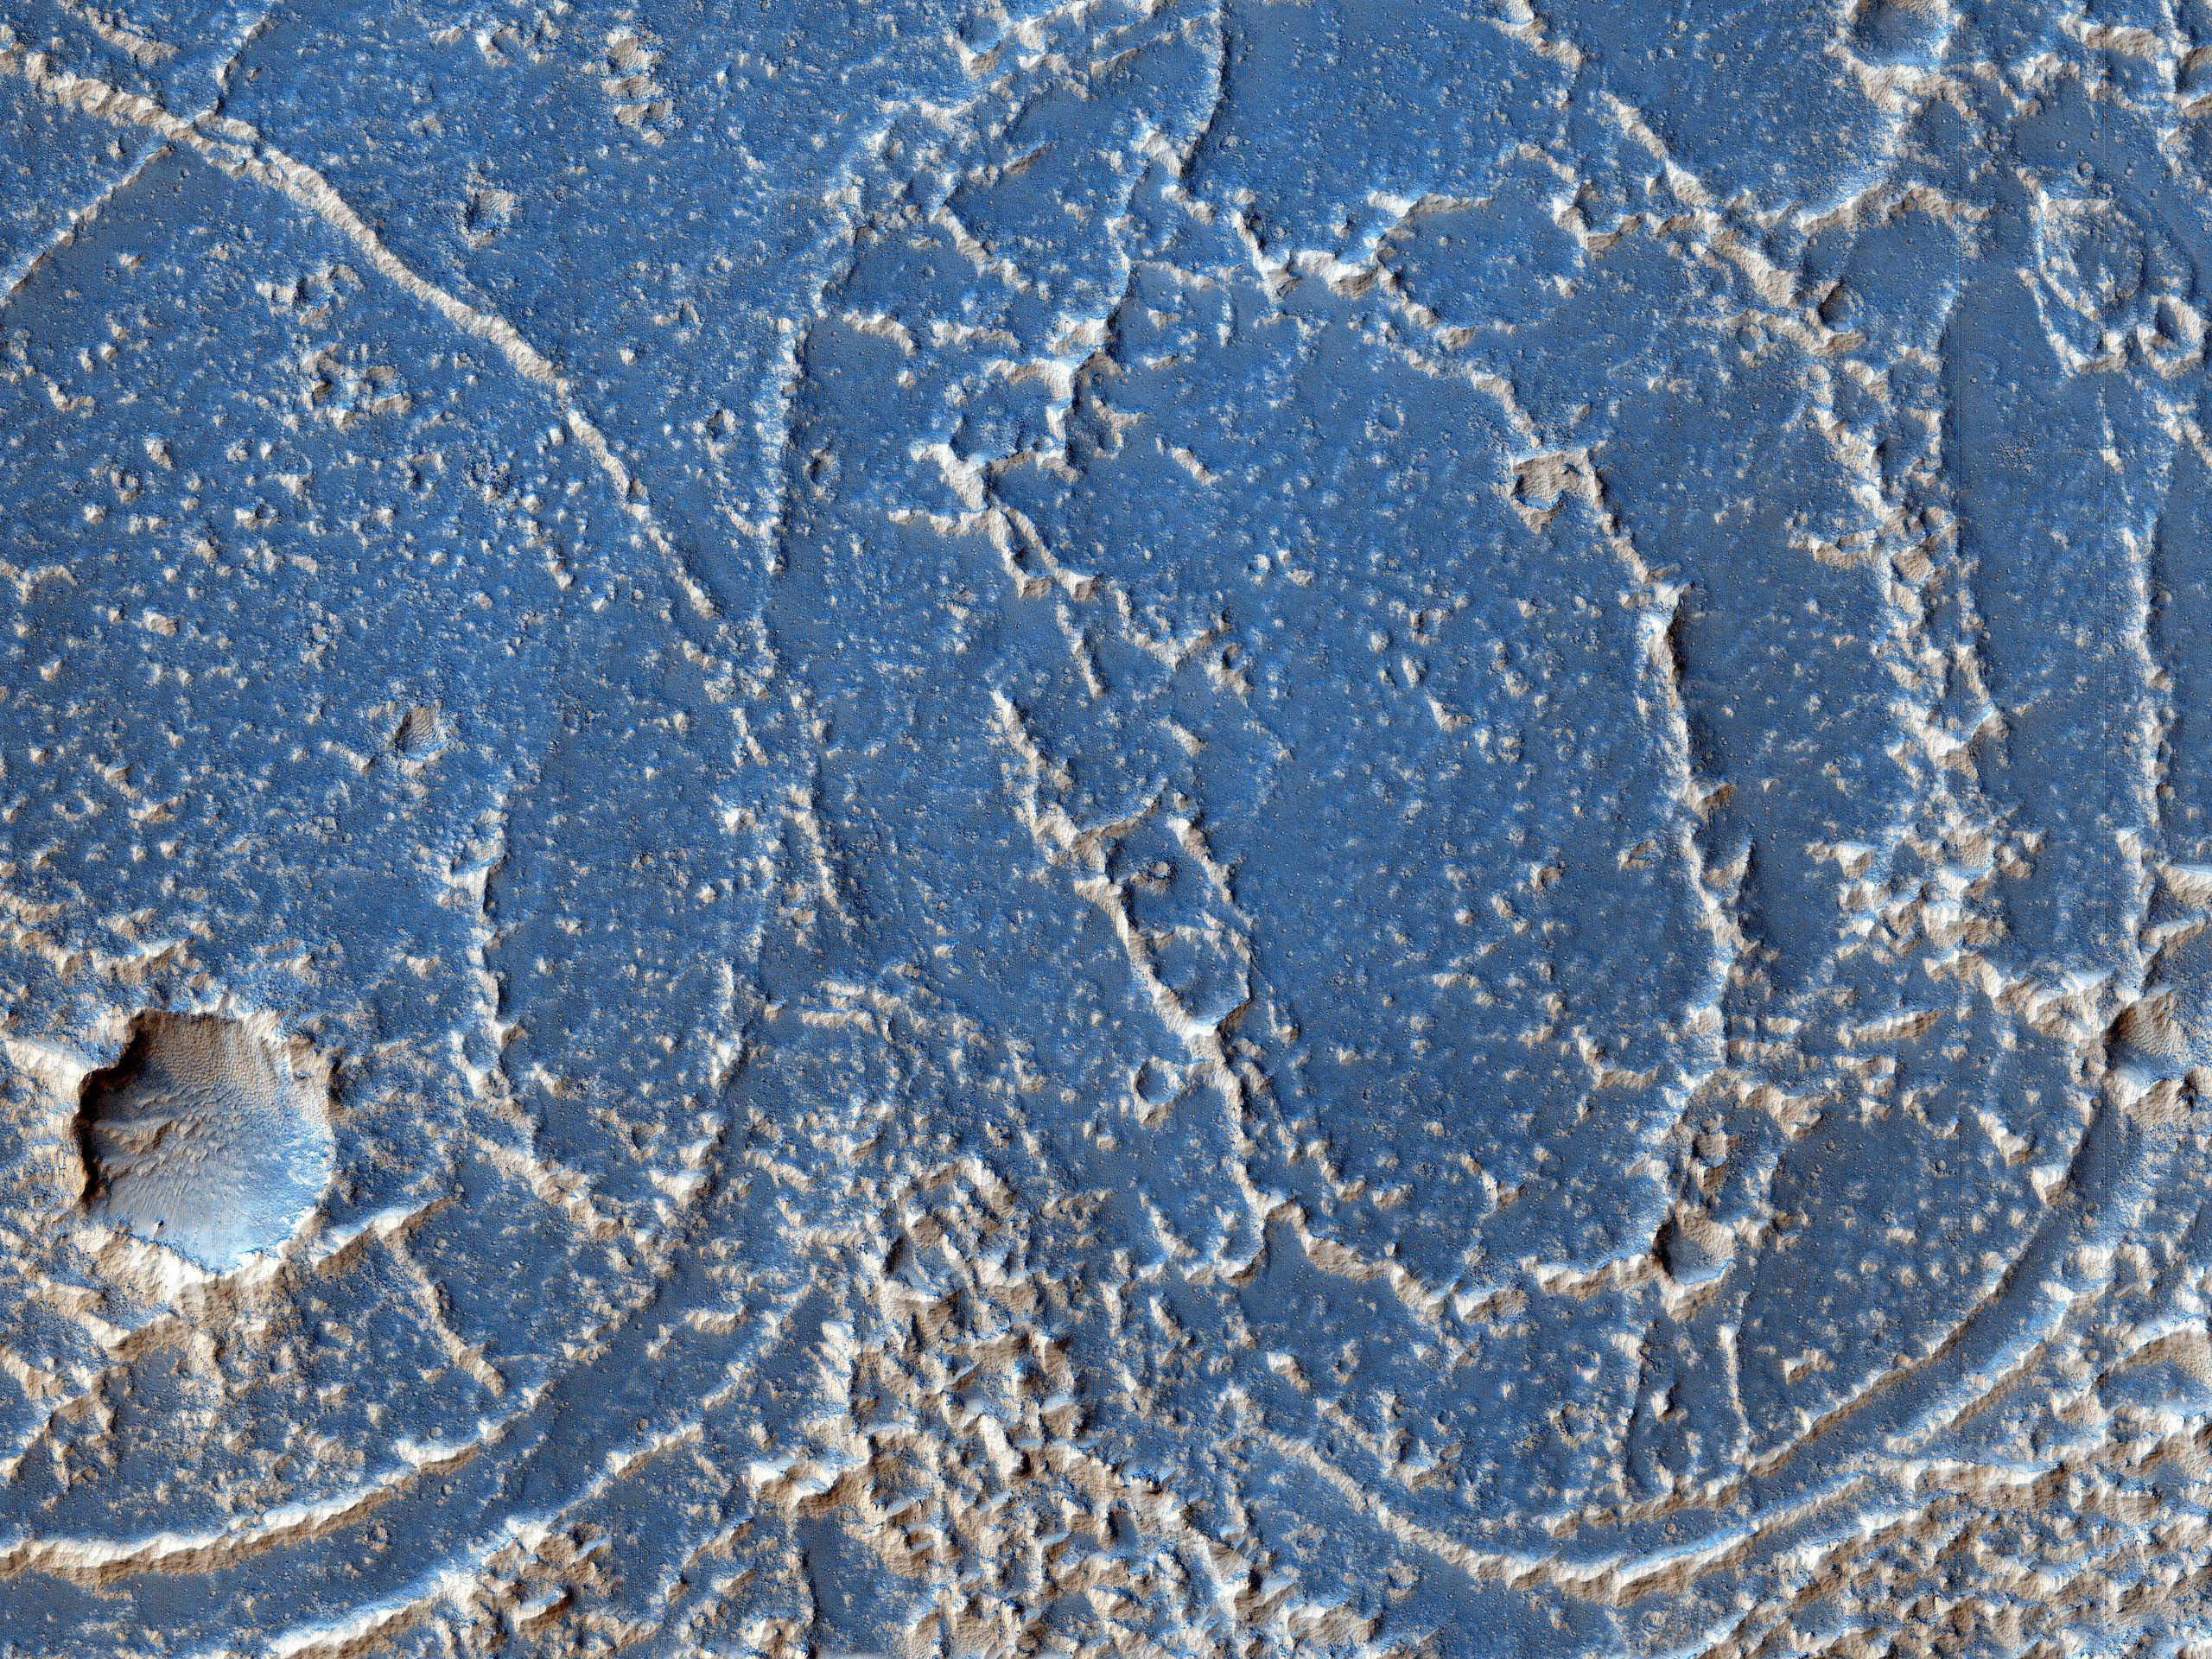 Strange patterns in Echus Chasma region of Mars | See pic